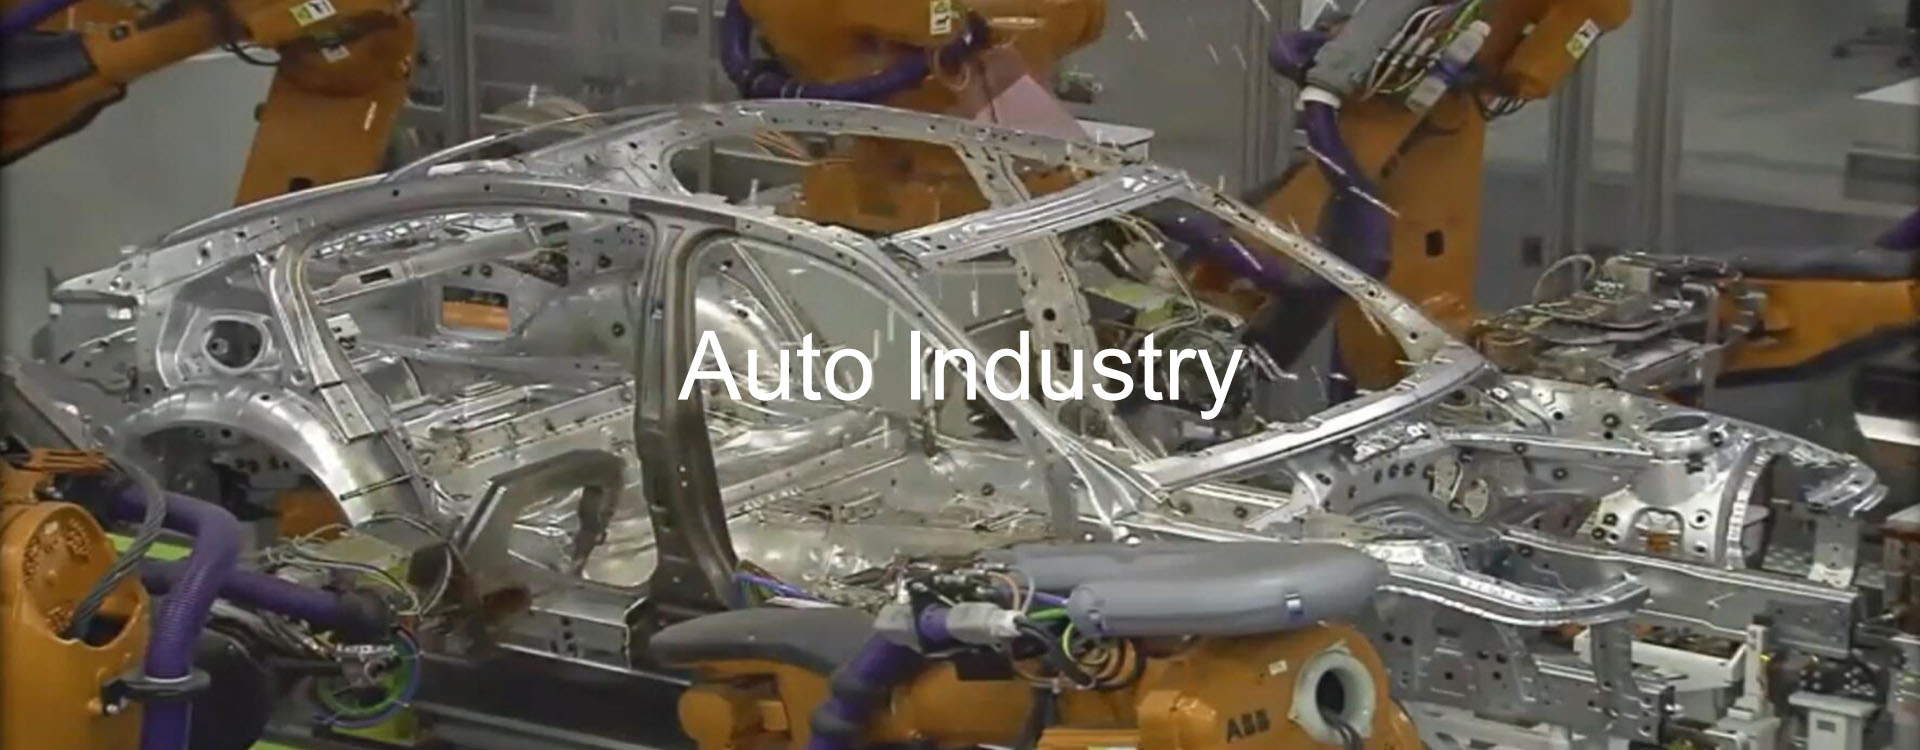 Auto Industry